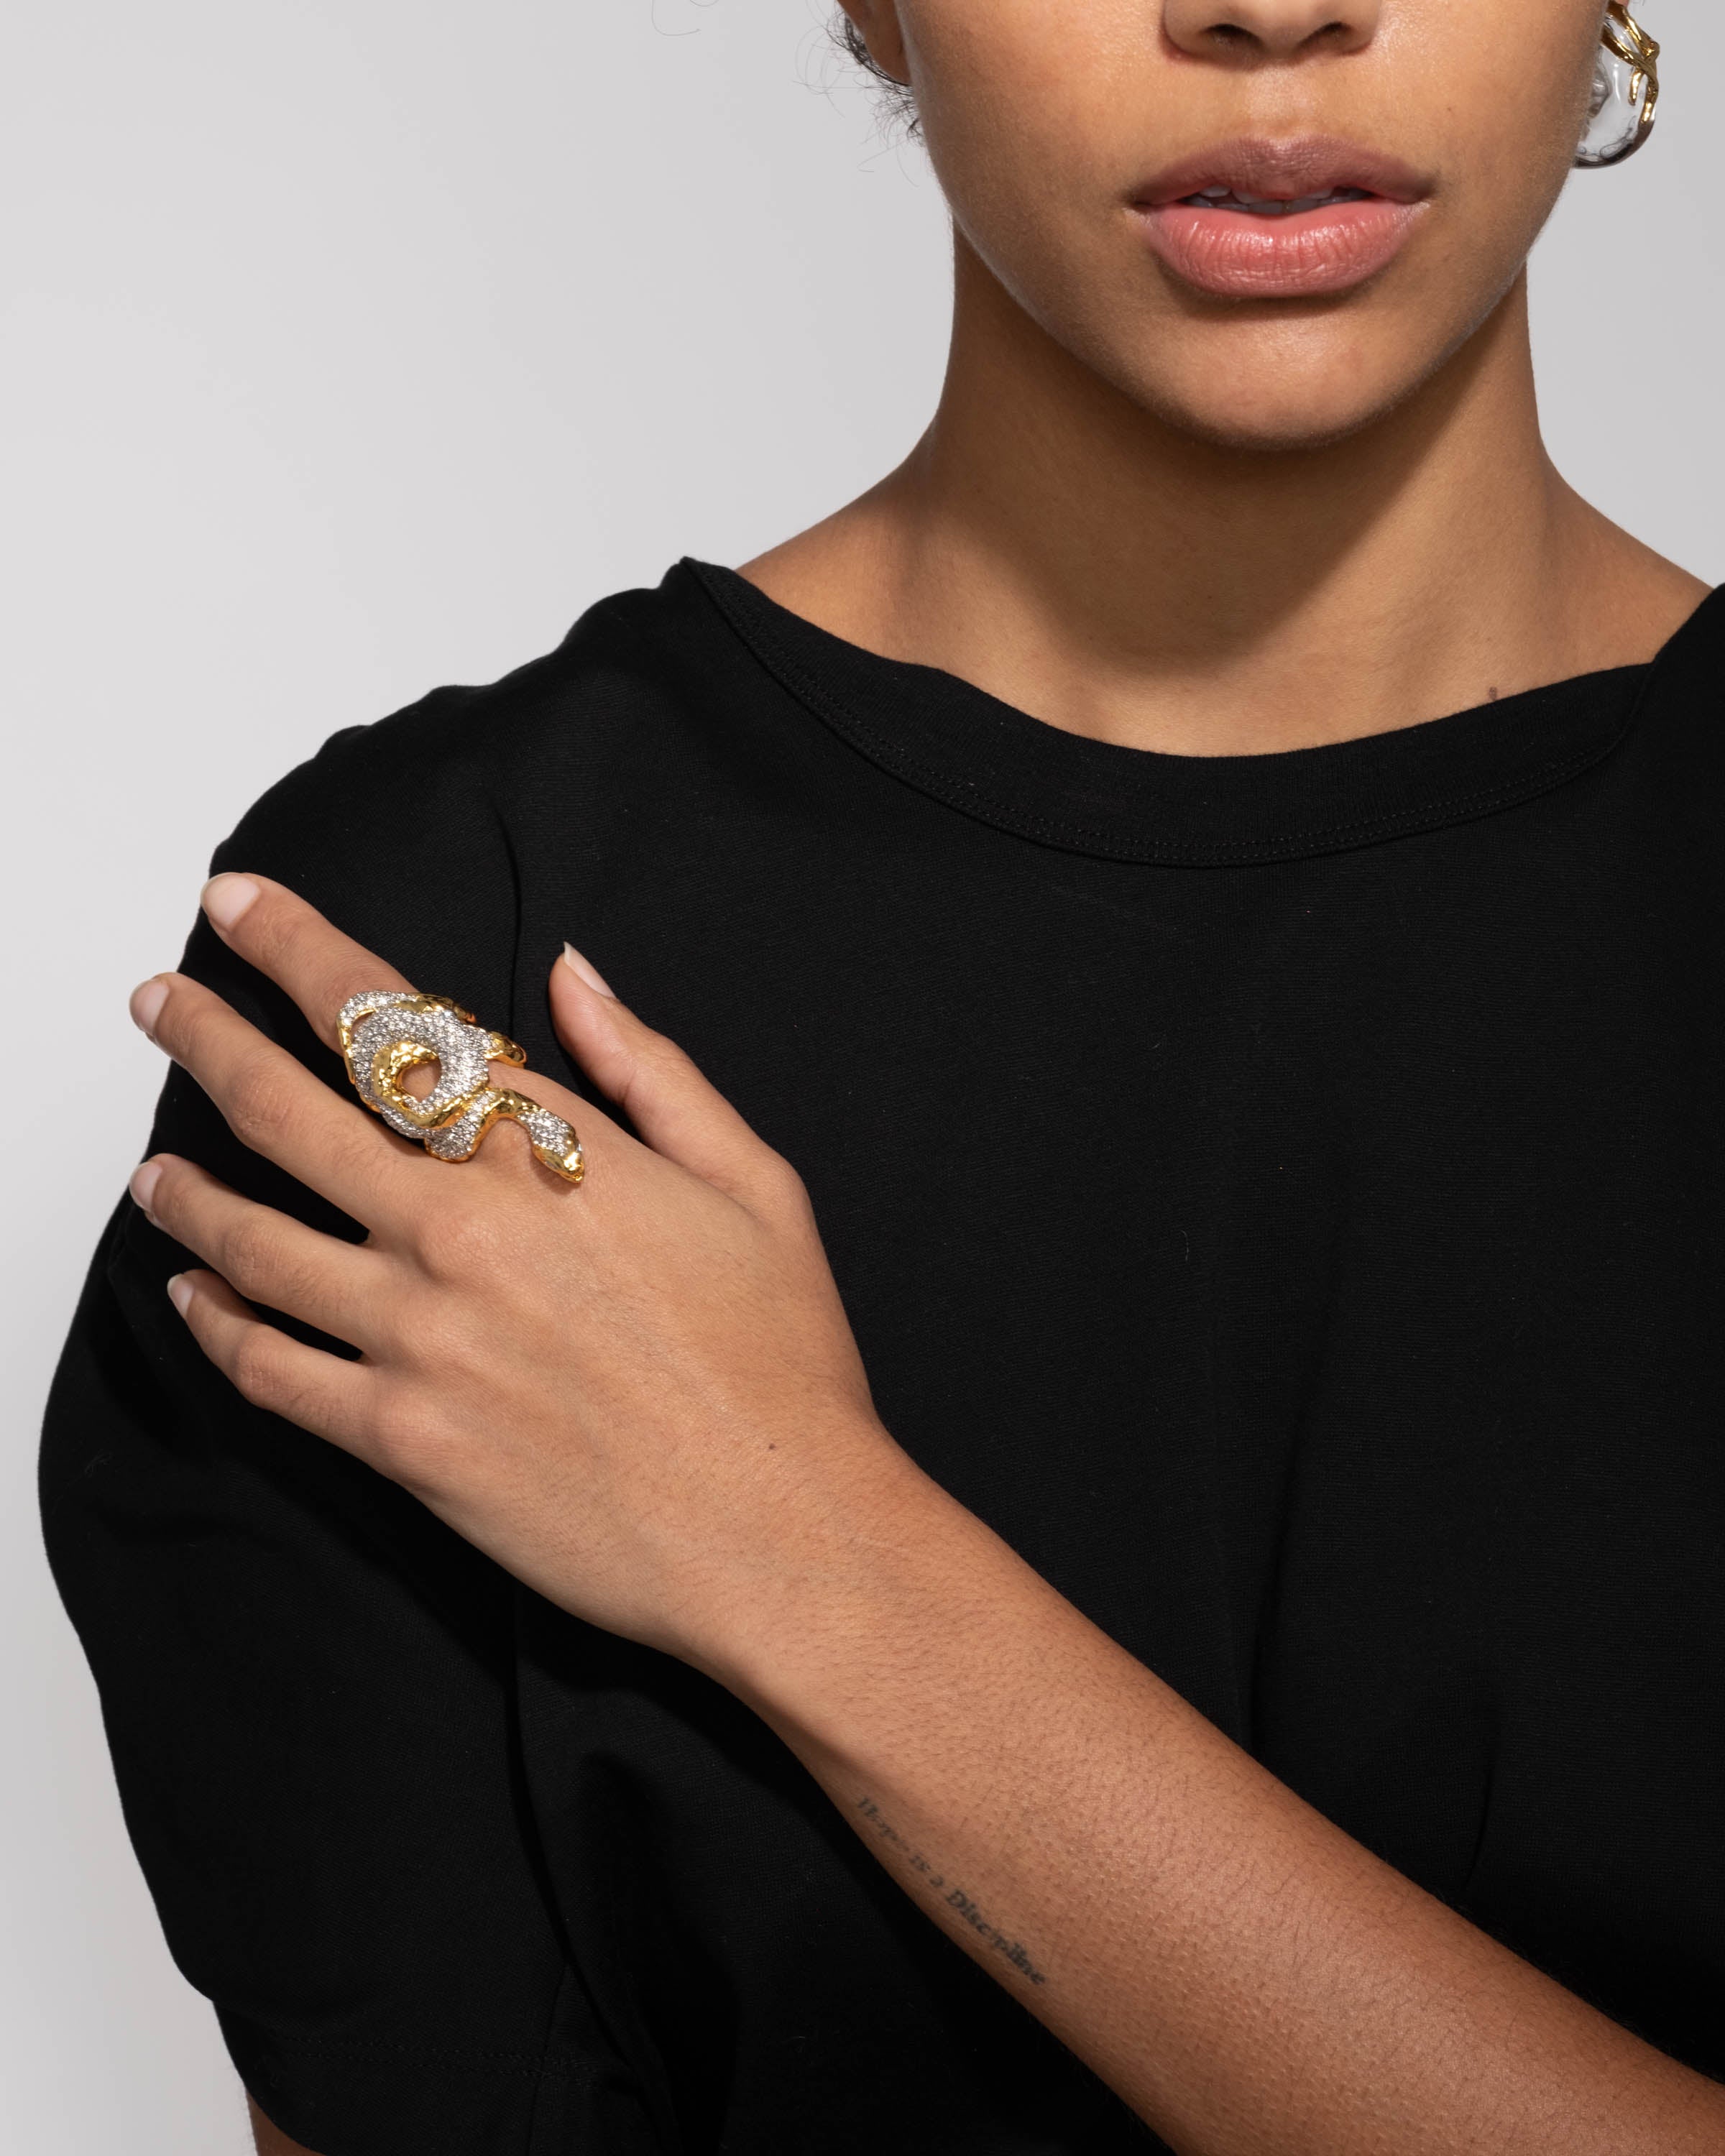 SWATCH BIJOUX LOVE Explosion Pearls Ring - Original Swatch Jewelry - size 6  £29.99 - PicClick UK